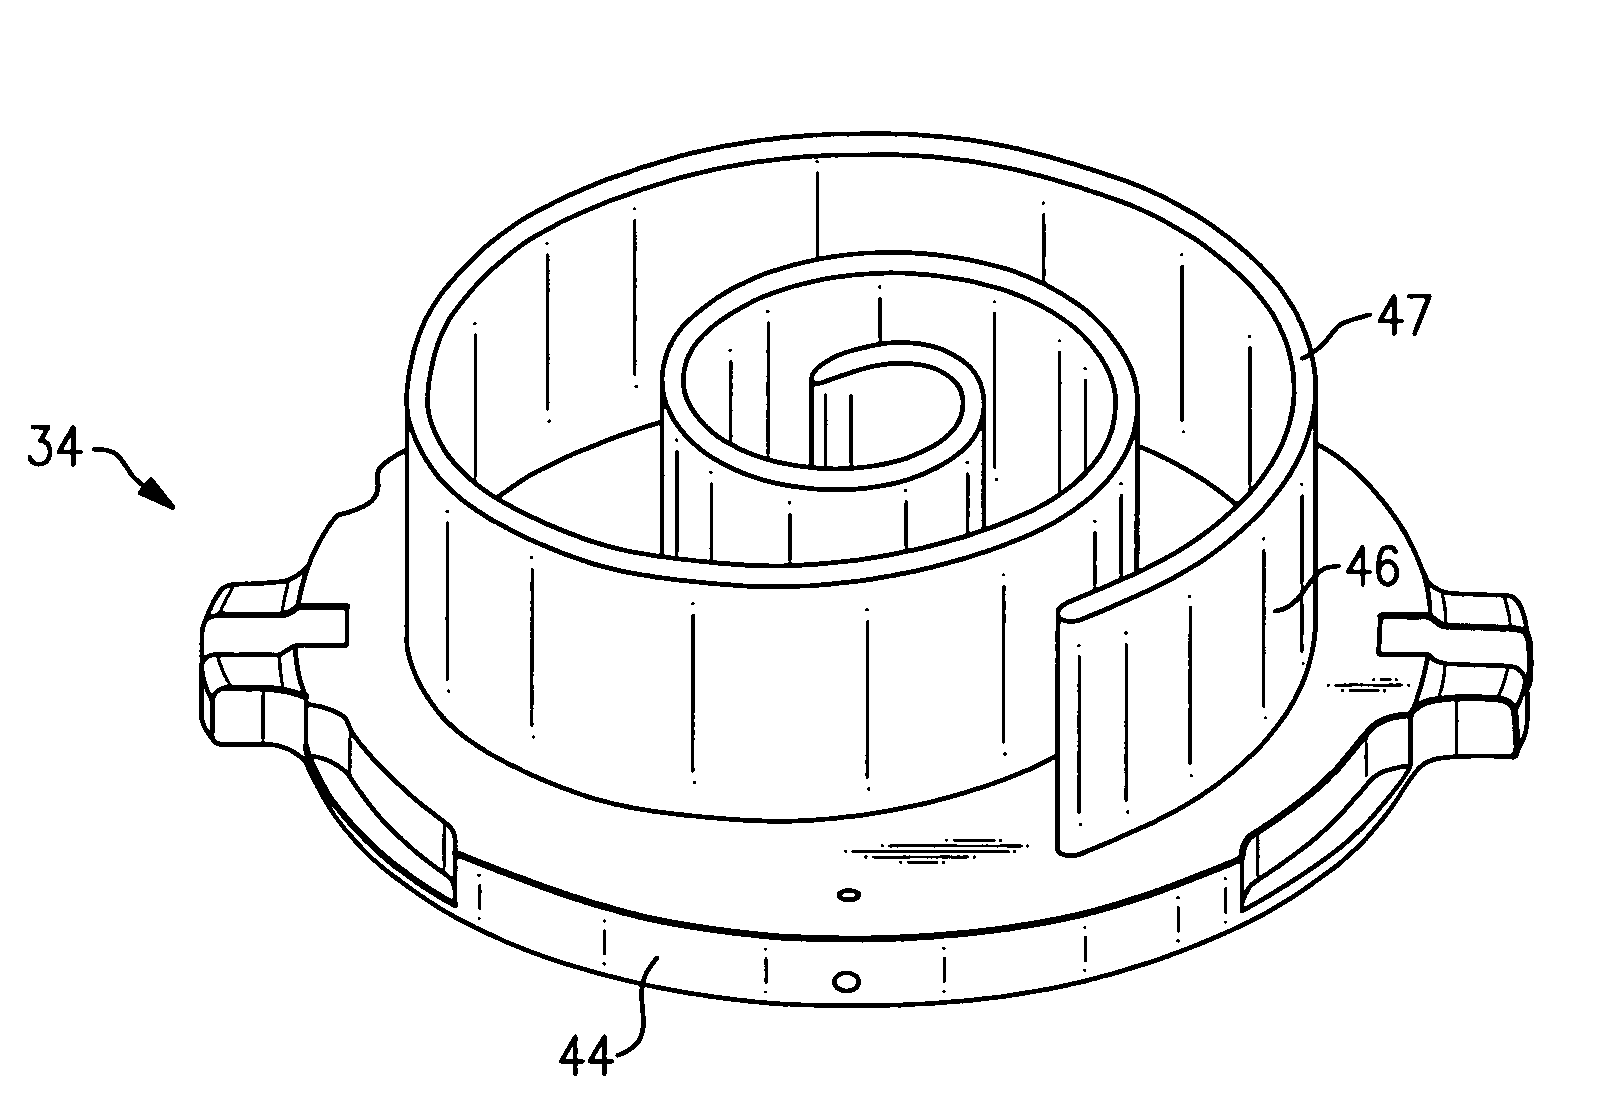 Ductile cast iron scroll compressor